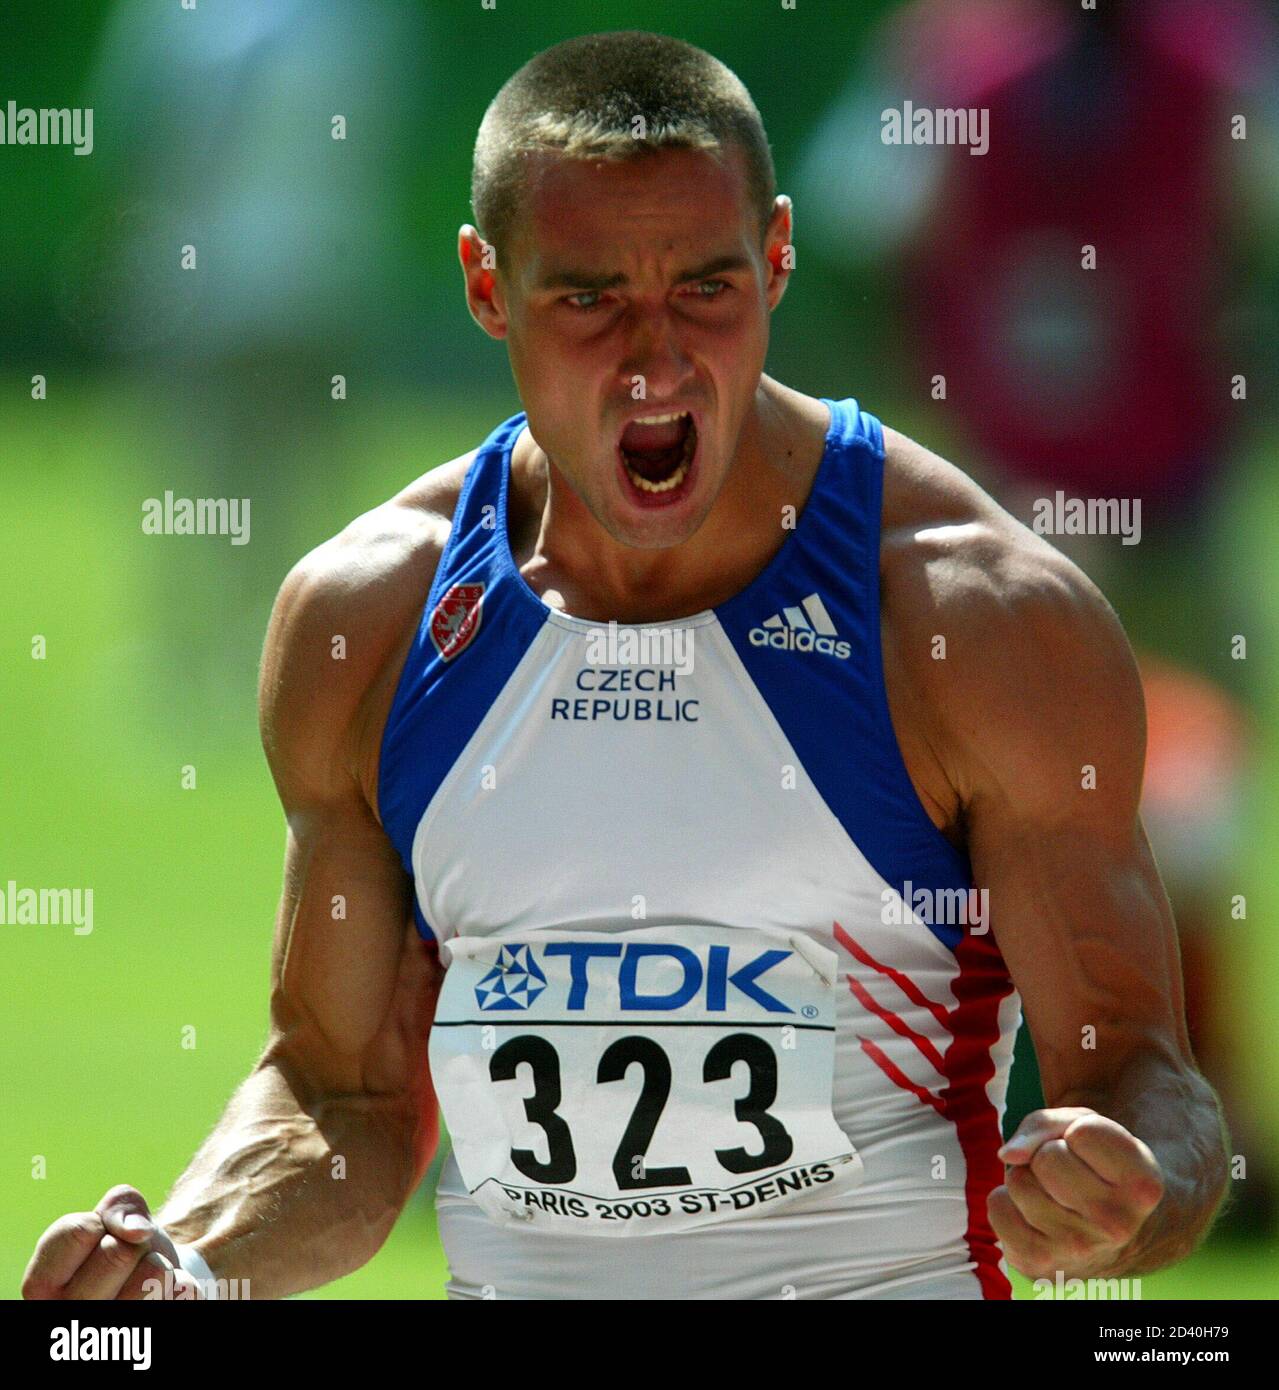 czech athlete former world record holder in the decathlon